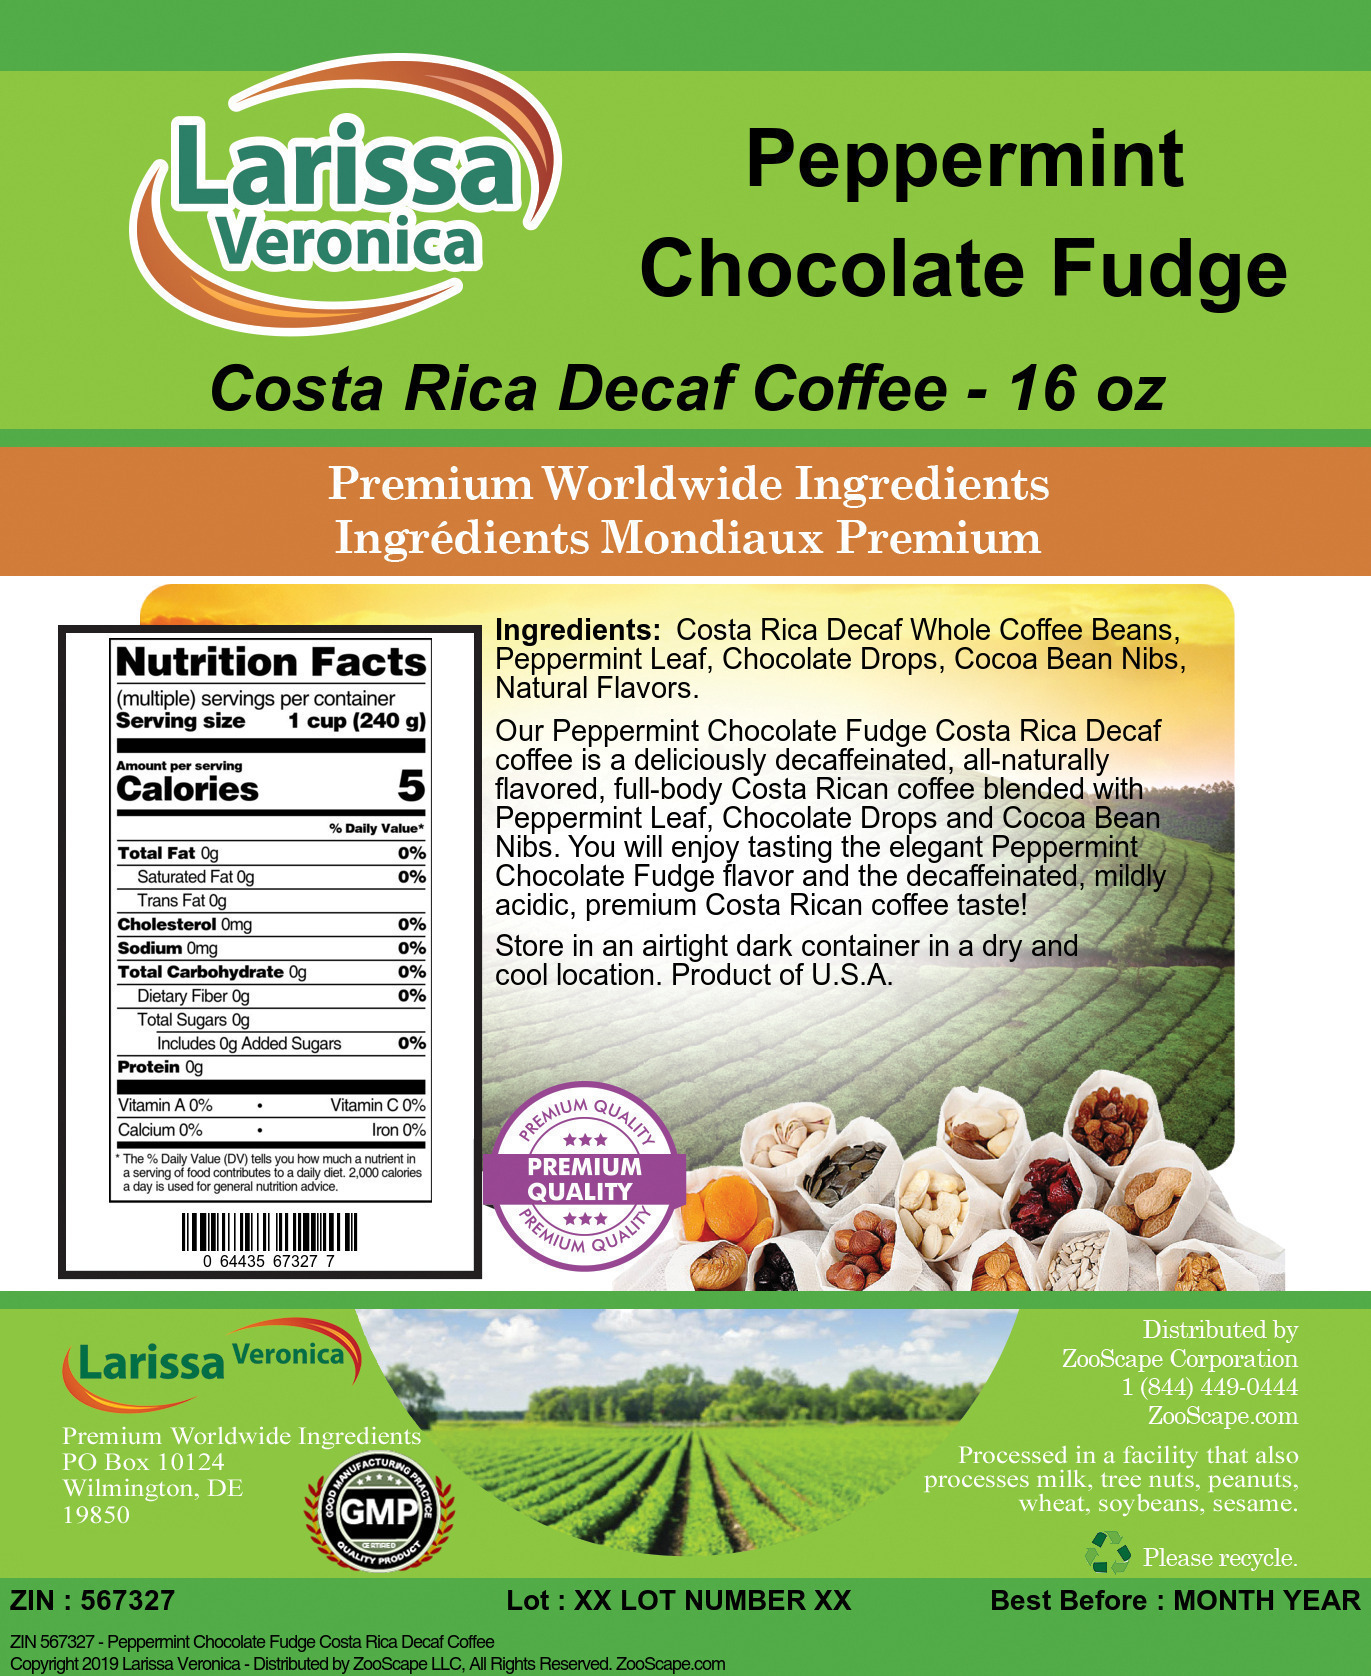 Peppermint Chocolate Fudge Costa Rica Decaf Coffee - Label